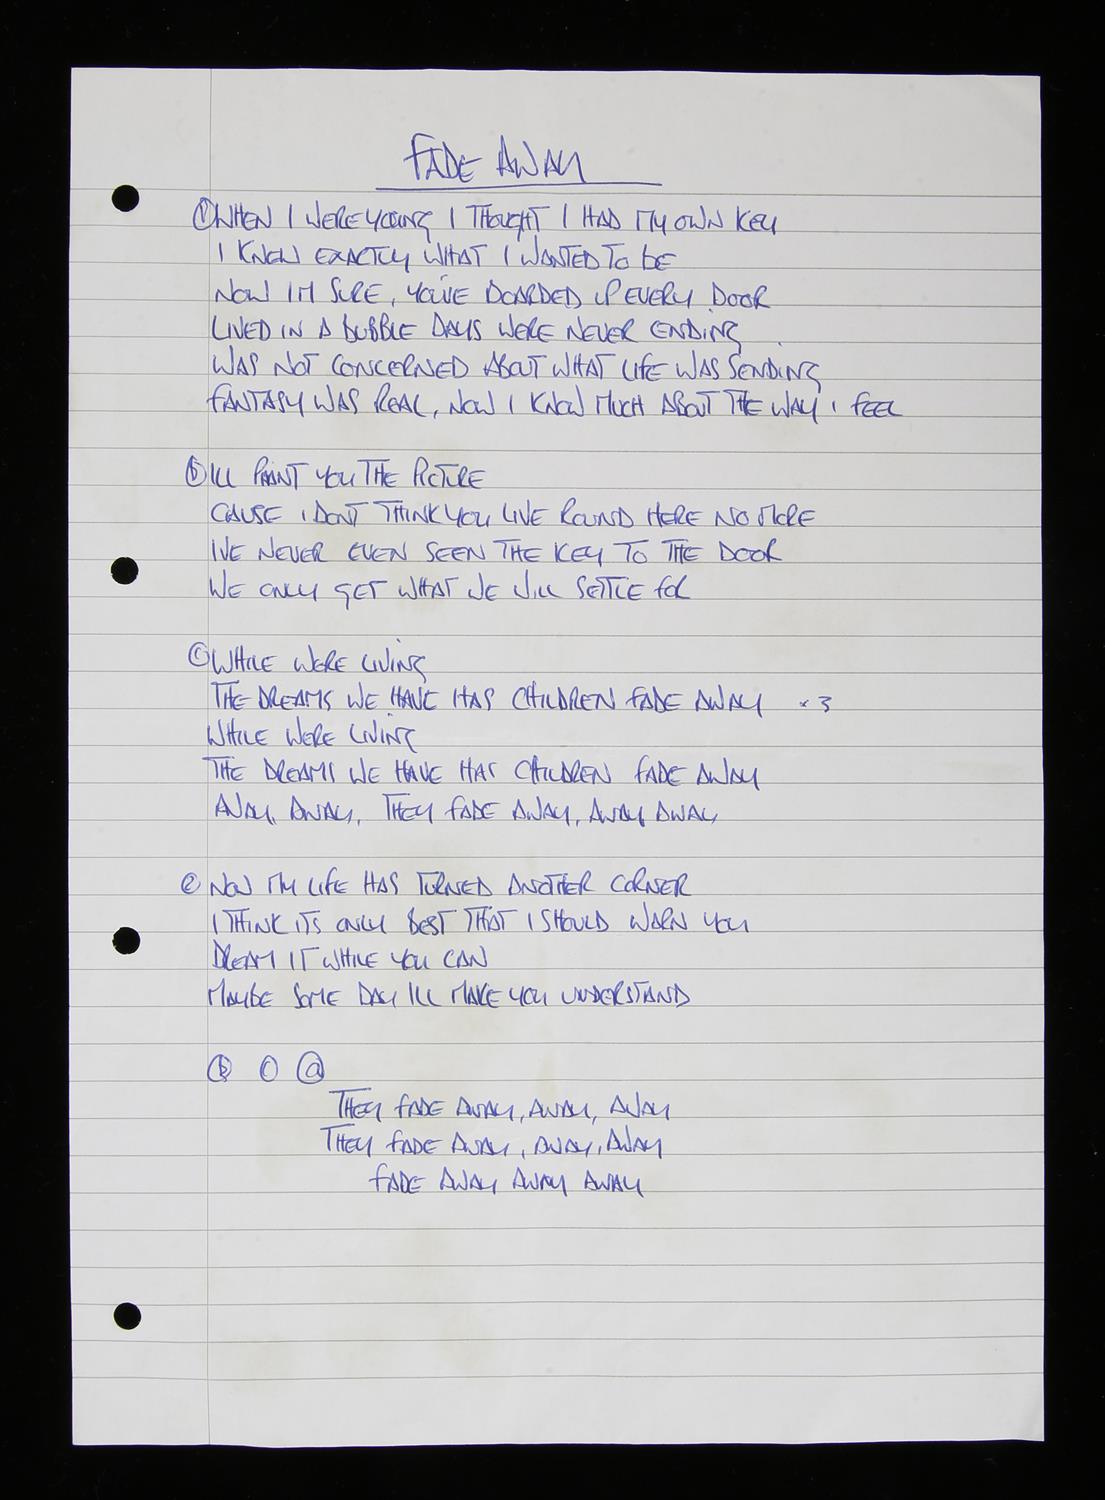 OASIS - "Fade Away" Lyrics Handwritten by Noel Gallagher. "Fade Away" lyrics were not used for